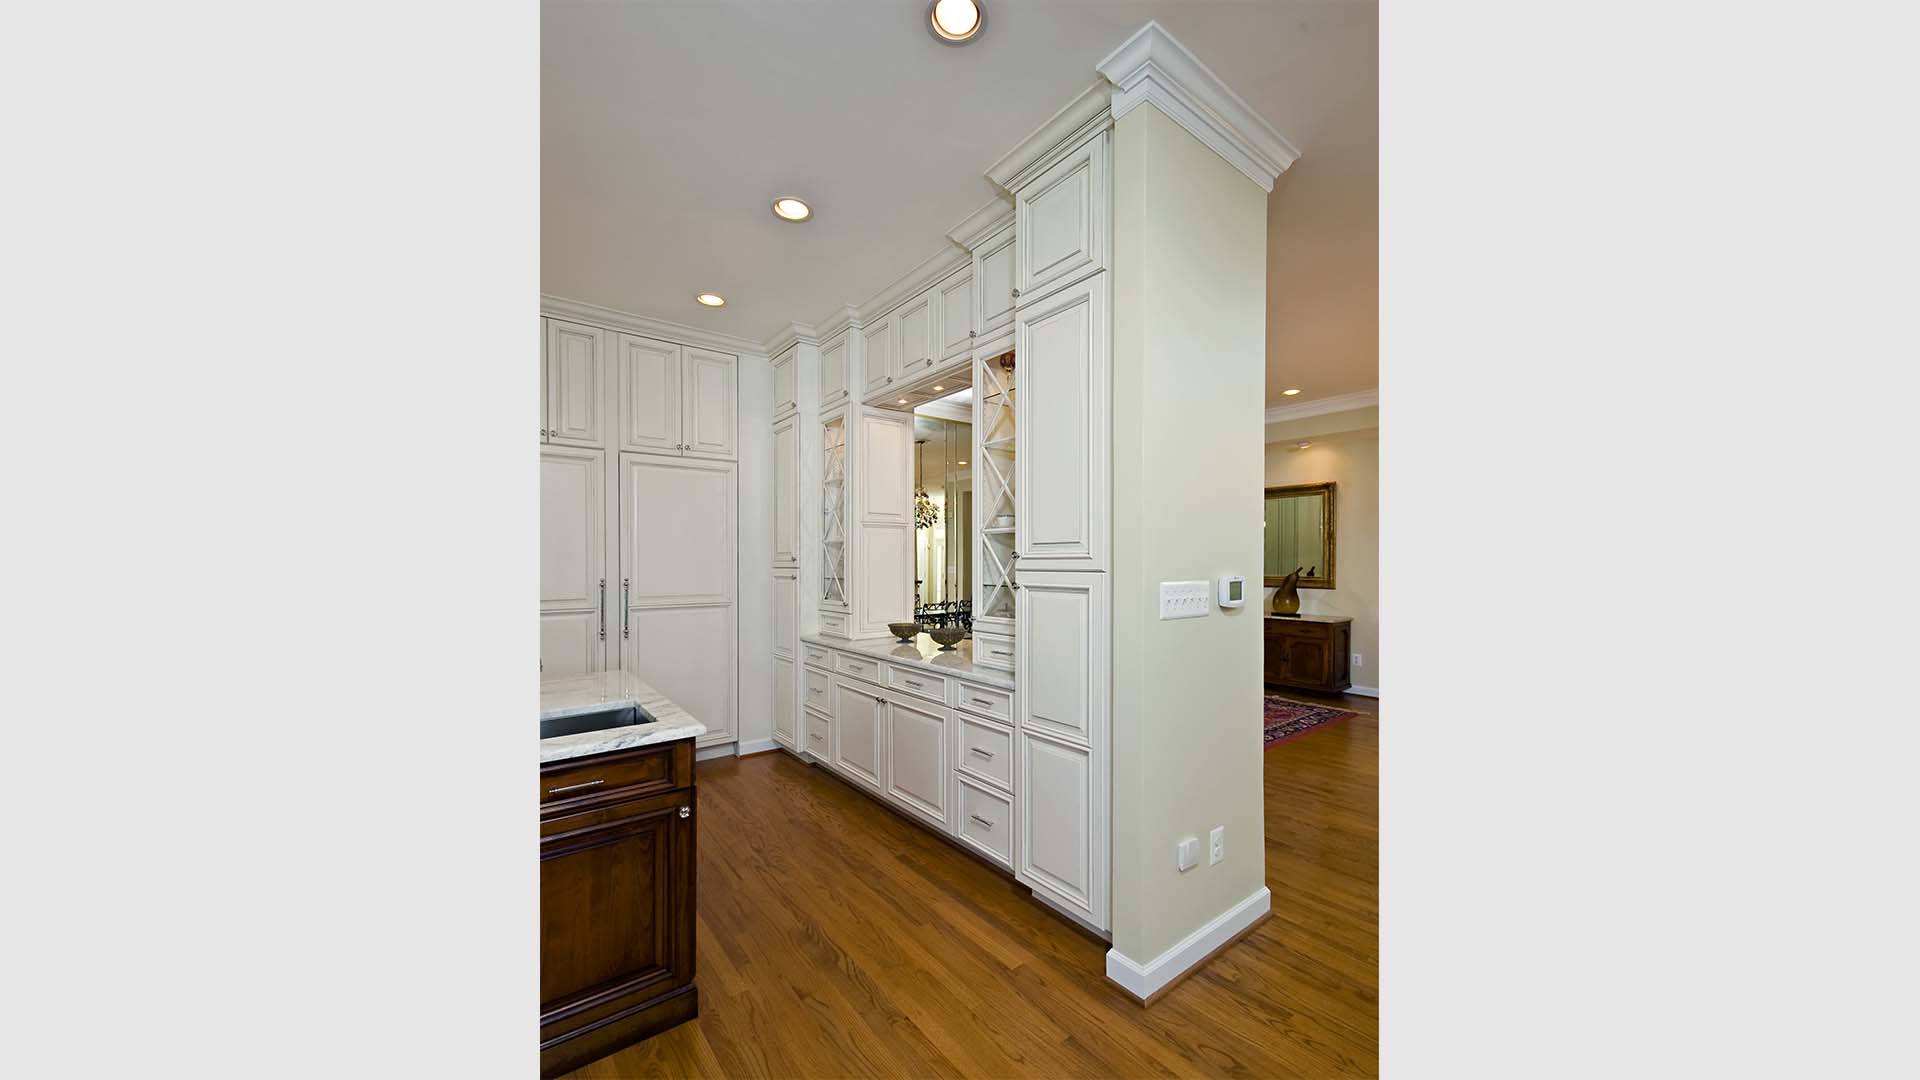 2013 Professional Remodeler, Silver Award Winner, Residential Kitchen $50,000 to $100,000